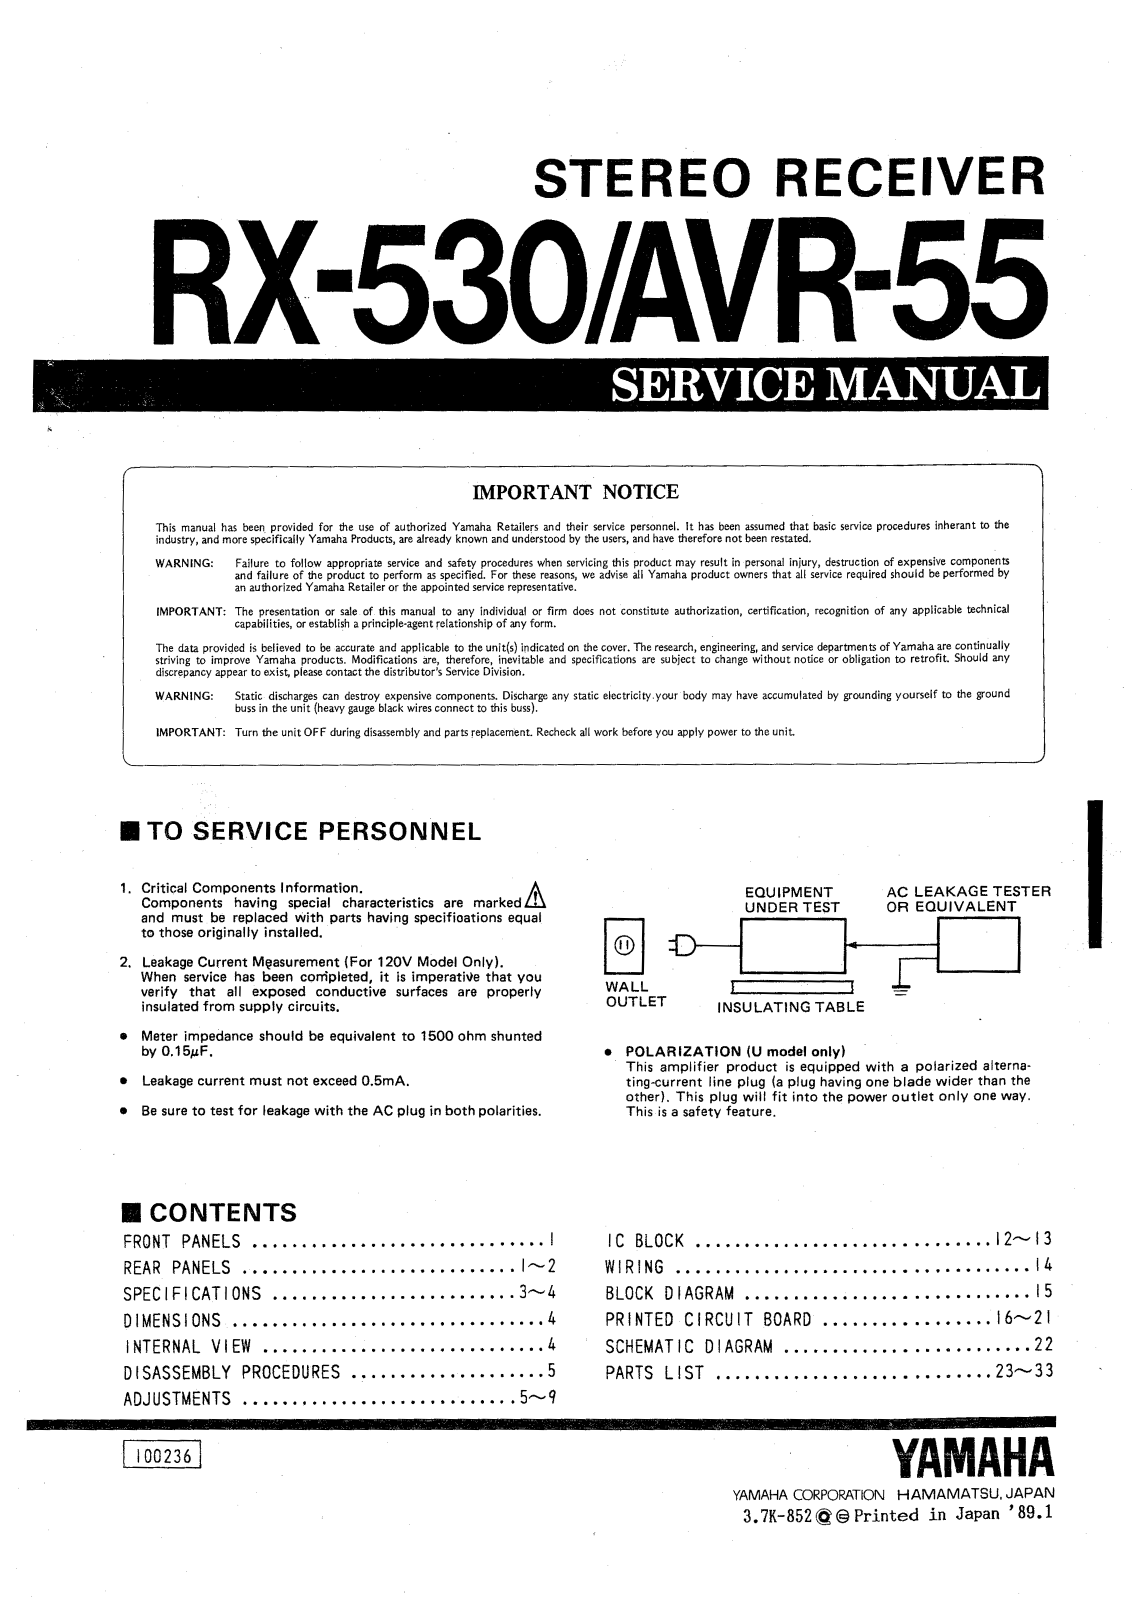 Yamaha RX-530, AVR-55 Service Manual